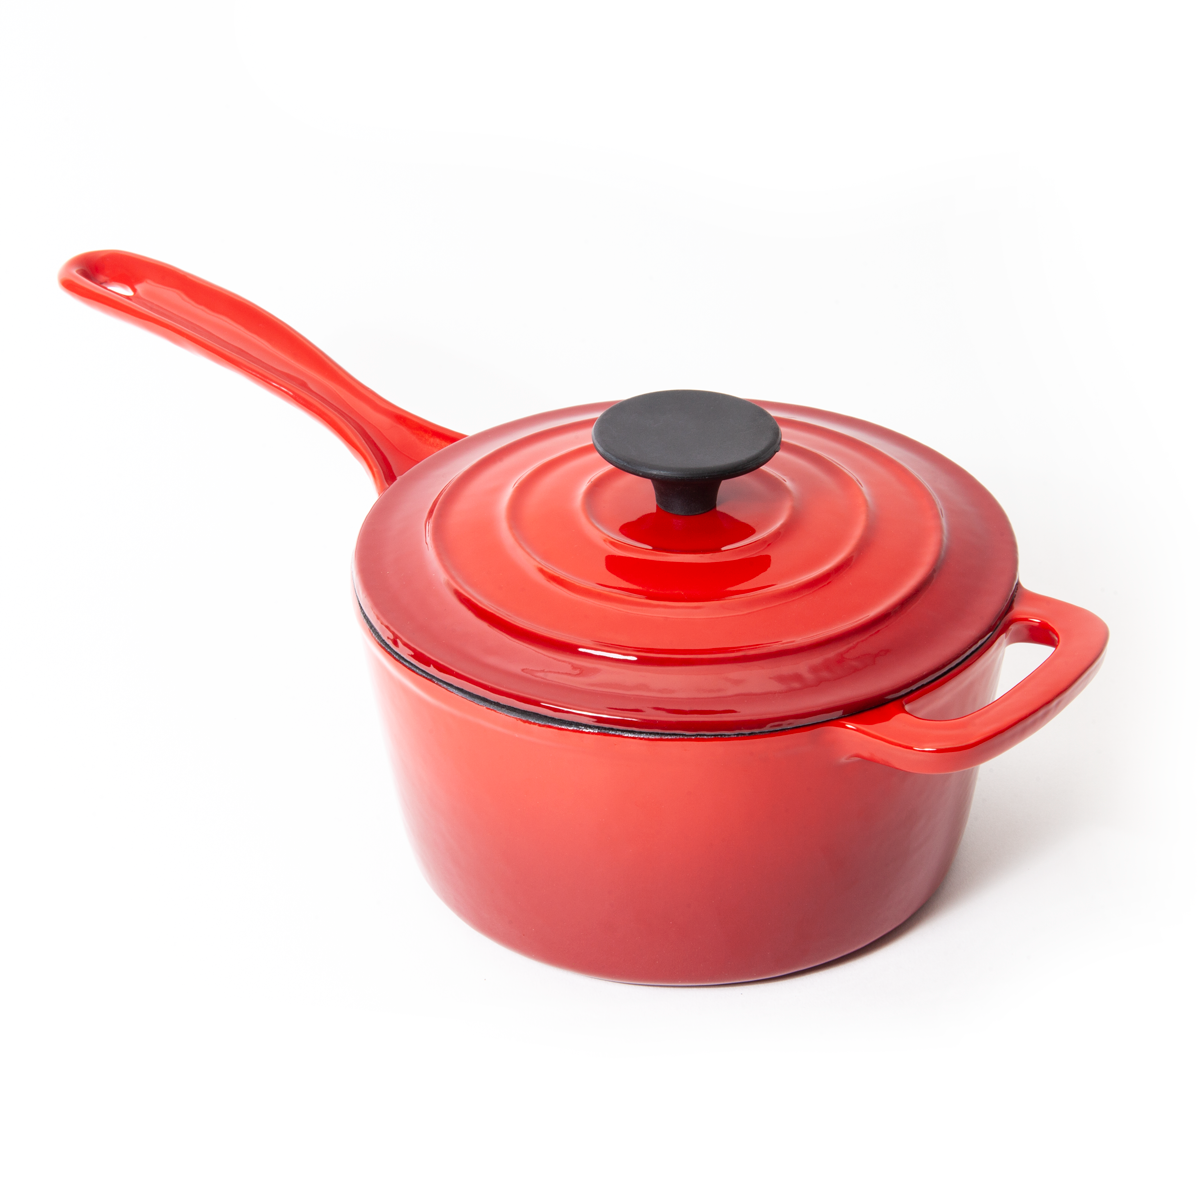 Red Nardelli Enameled Cast Iron Saucepan - 2 Quart – Nardelli Cookware USA